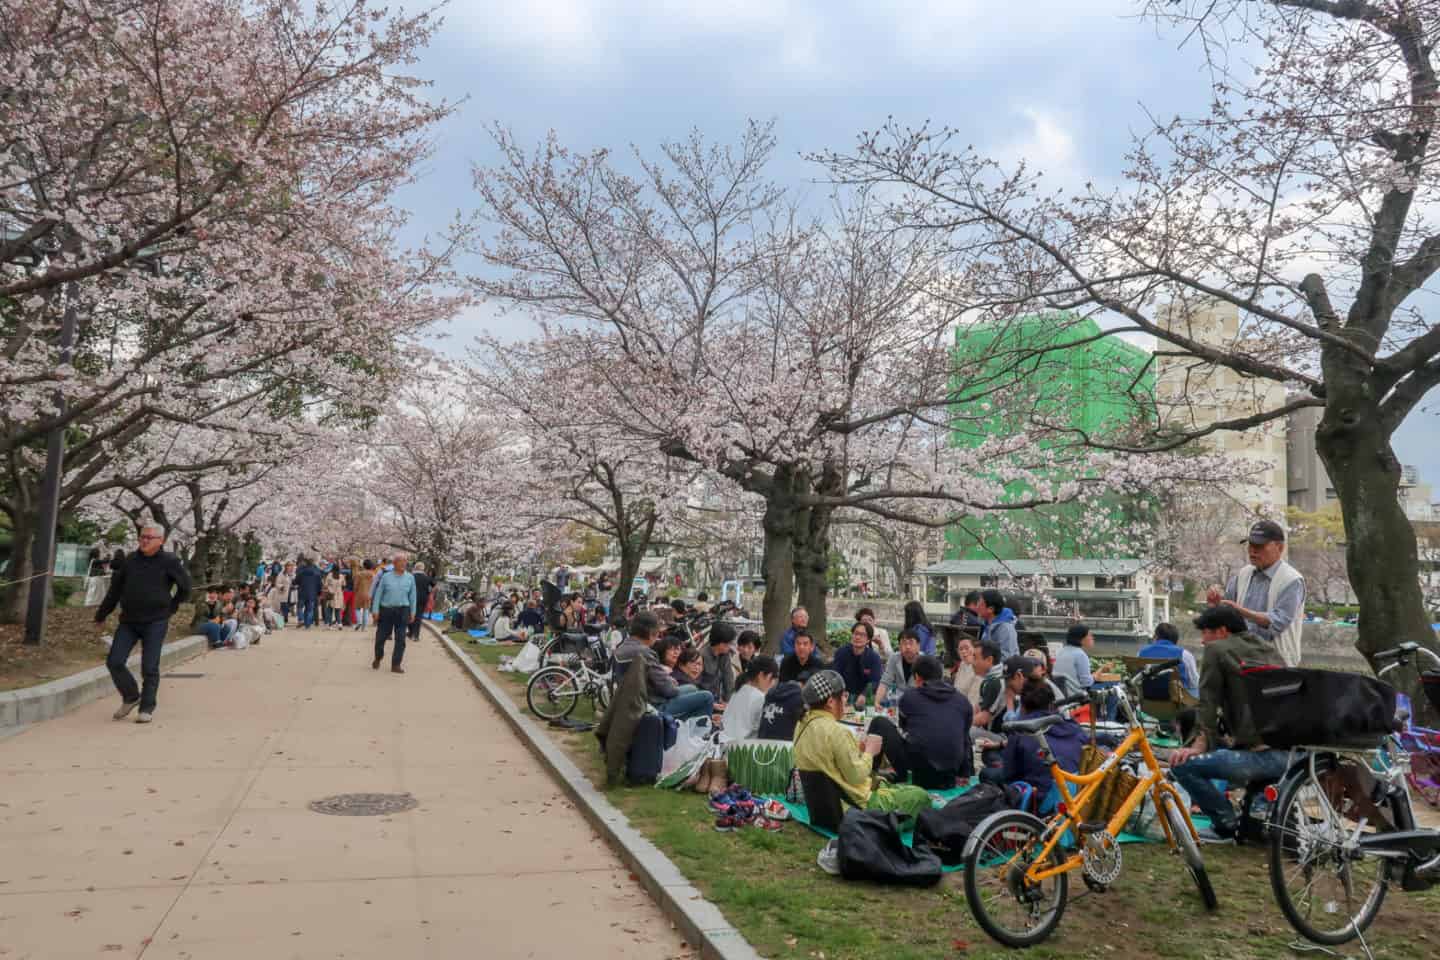 hiroshima peace park cherry blossom